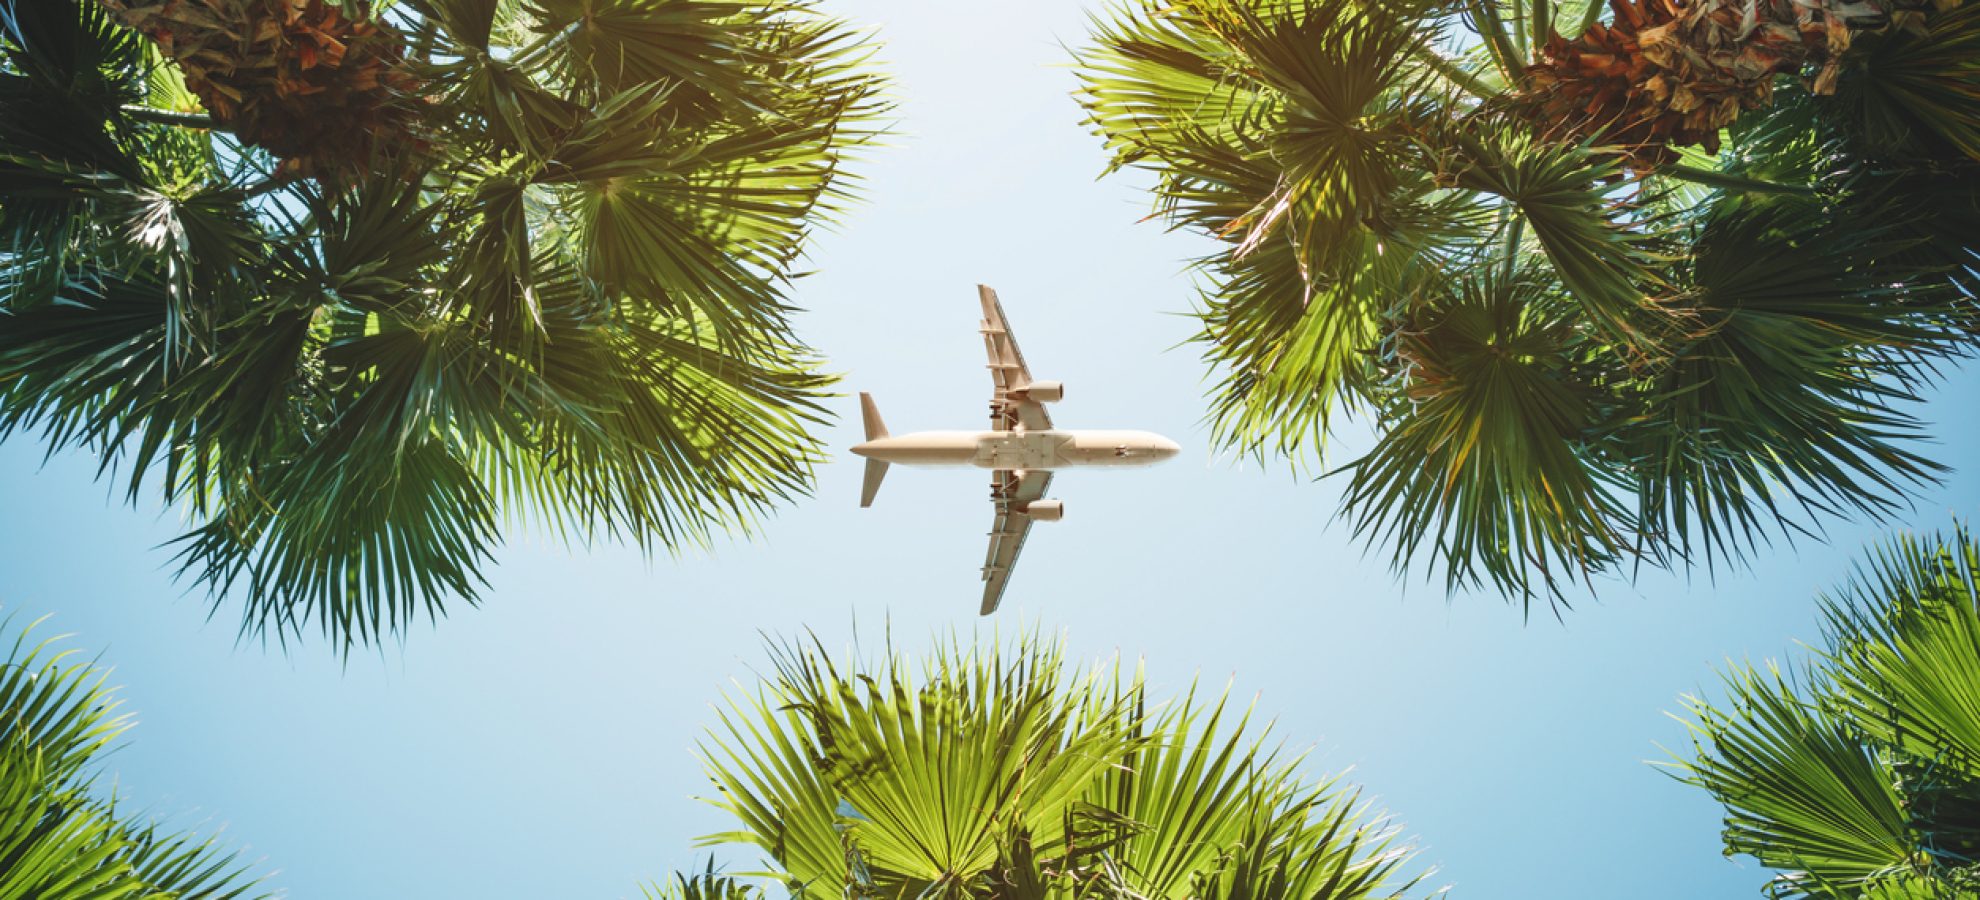 Goedkope-vliegtickets-tropical-palmtrees-airplane